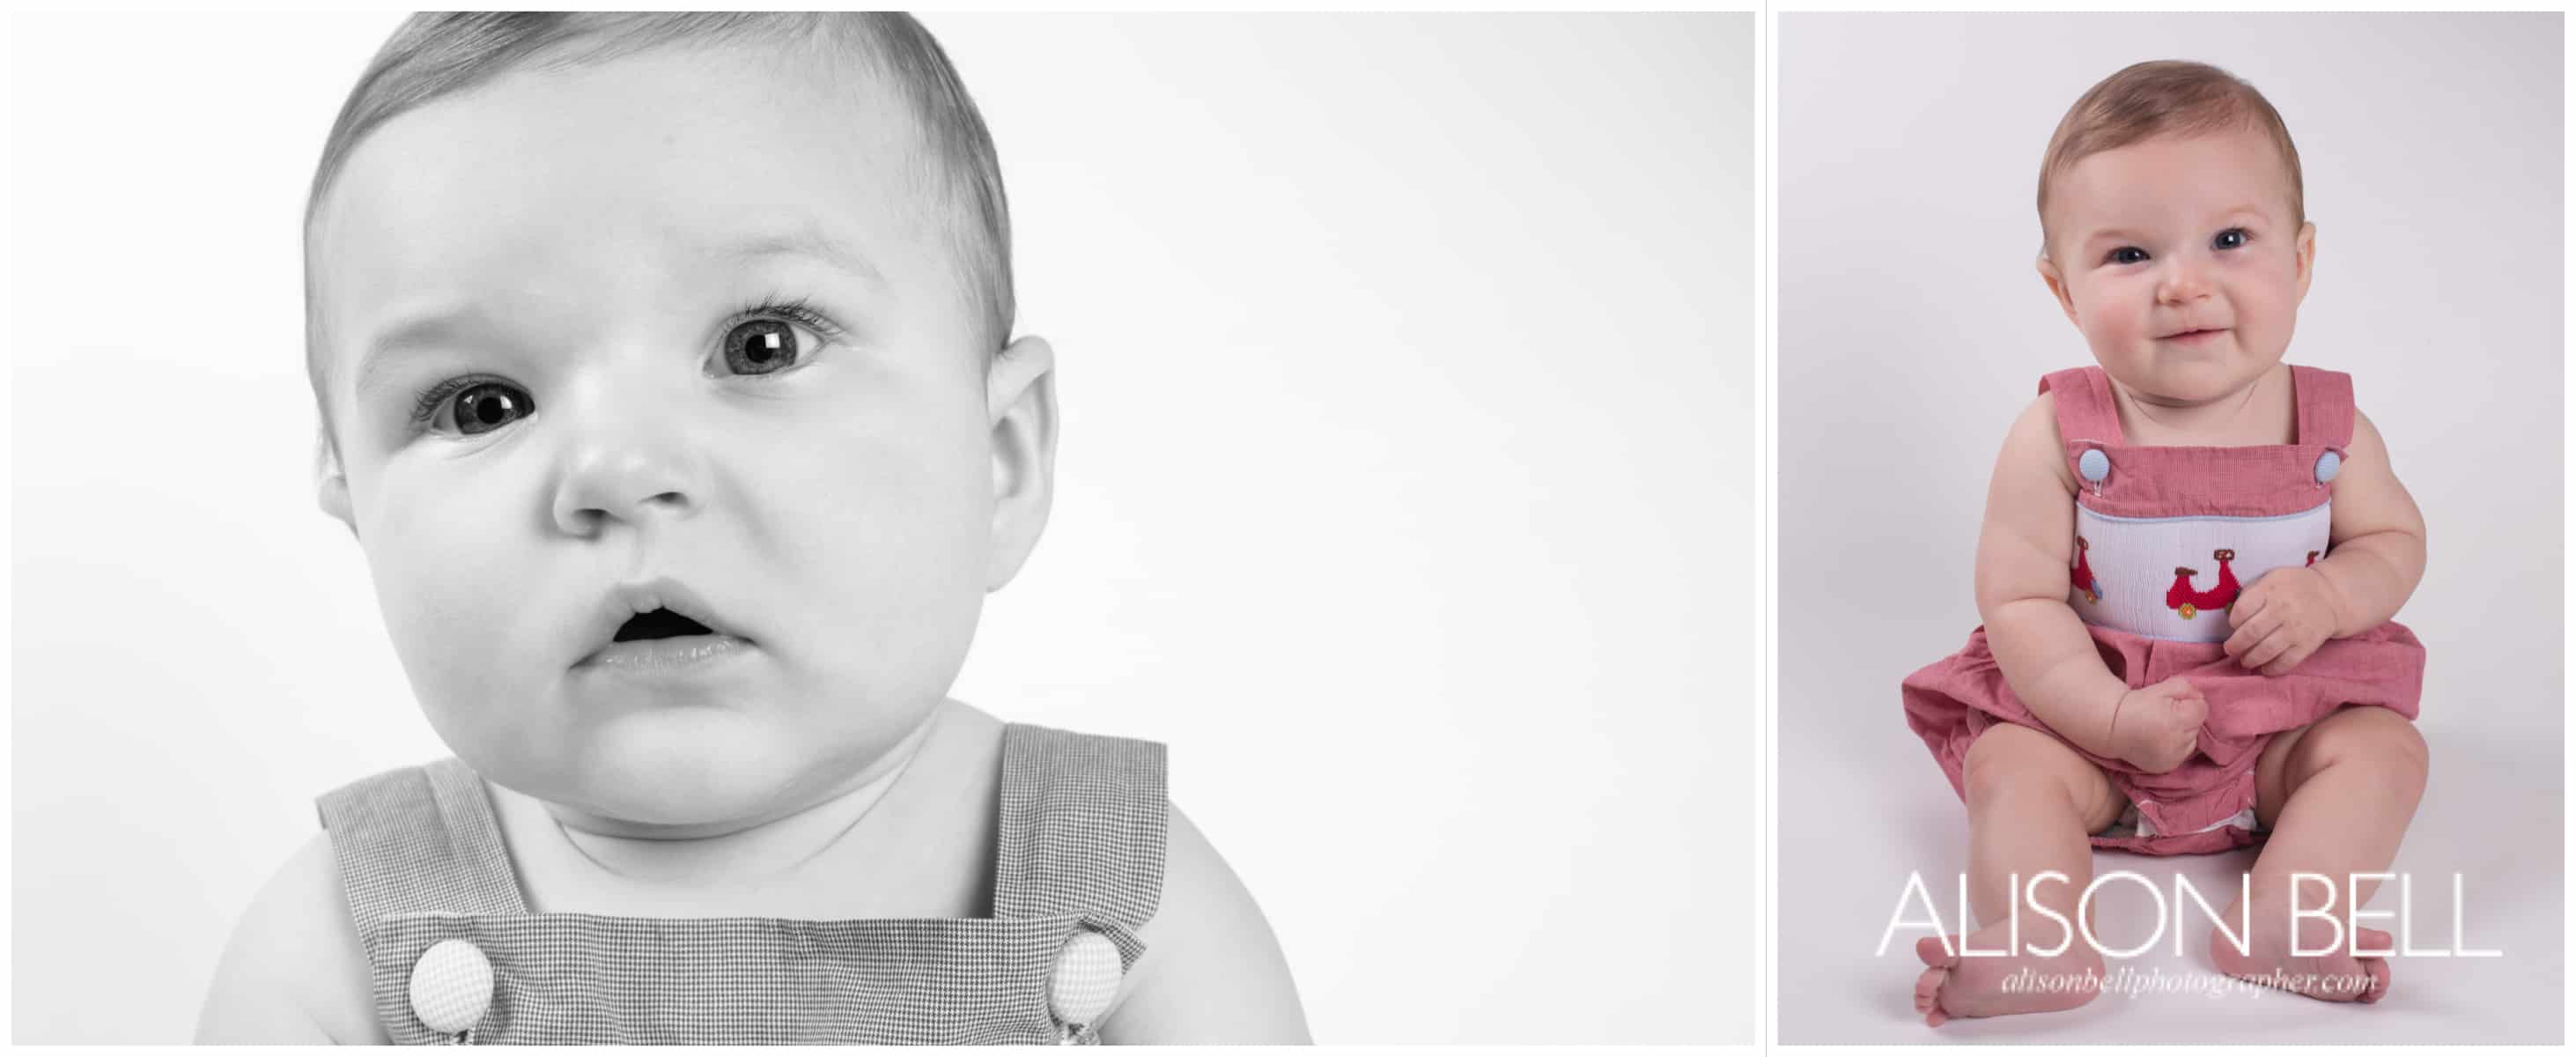 Alison Bell Photographer | Baby & Child Photographer